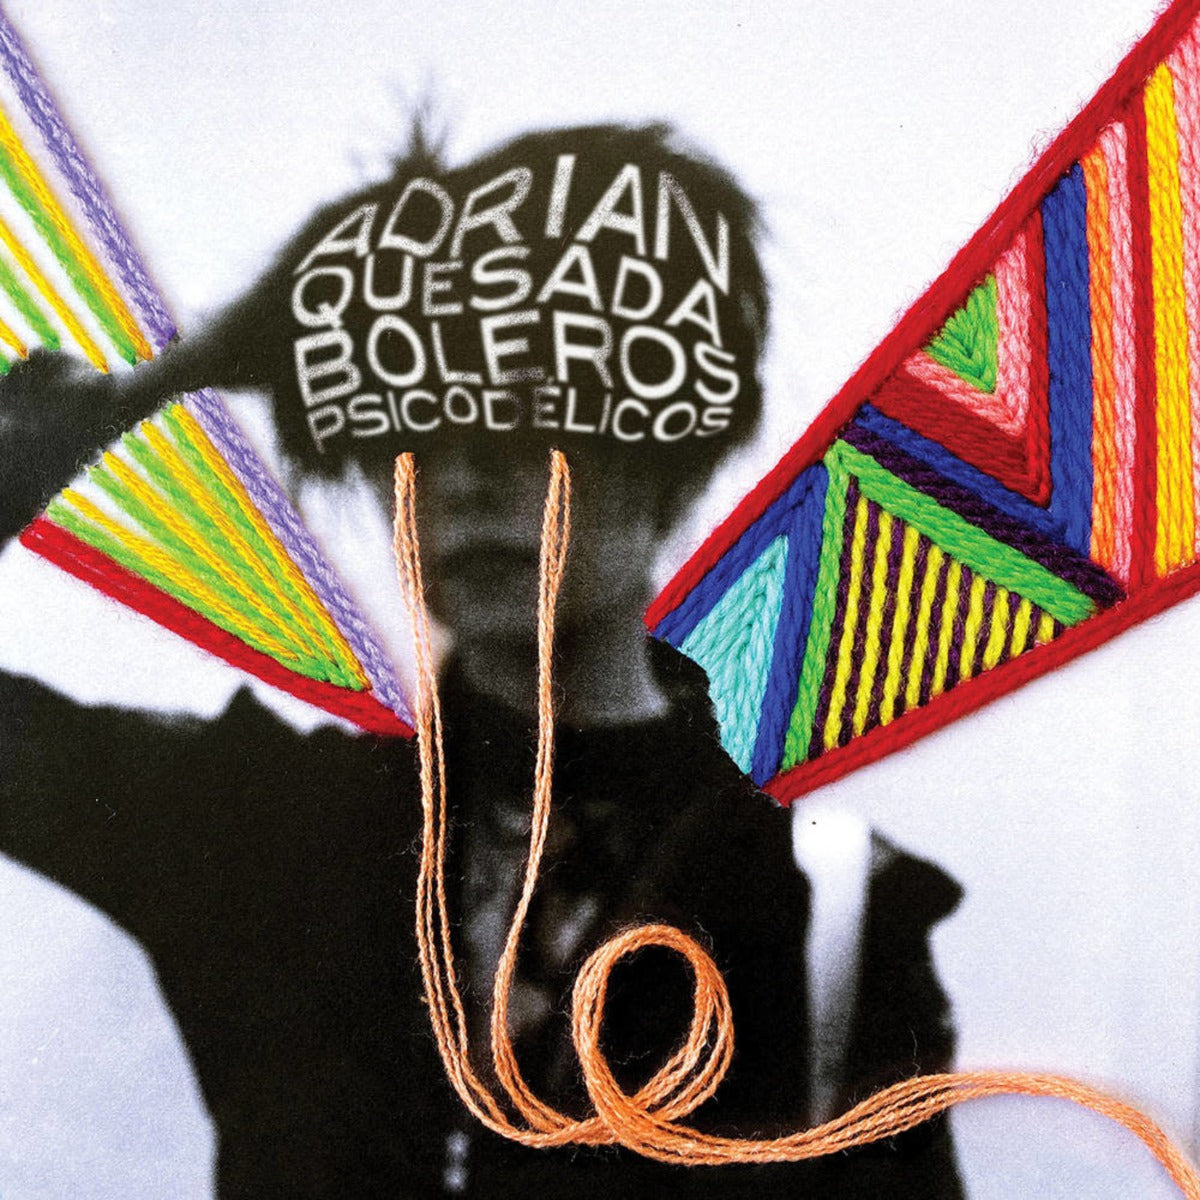 Adrian Quesada Boleros Psicodélicos (Red) Vinyl